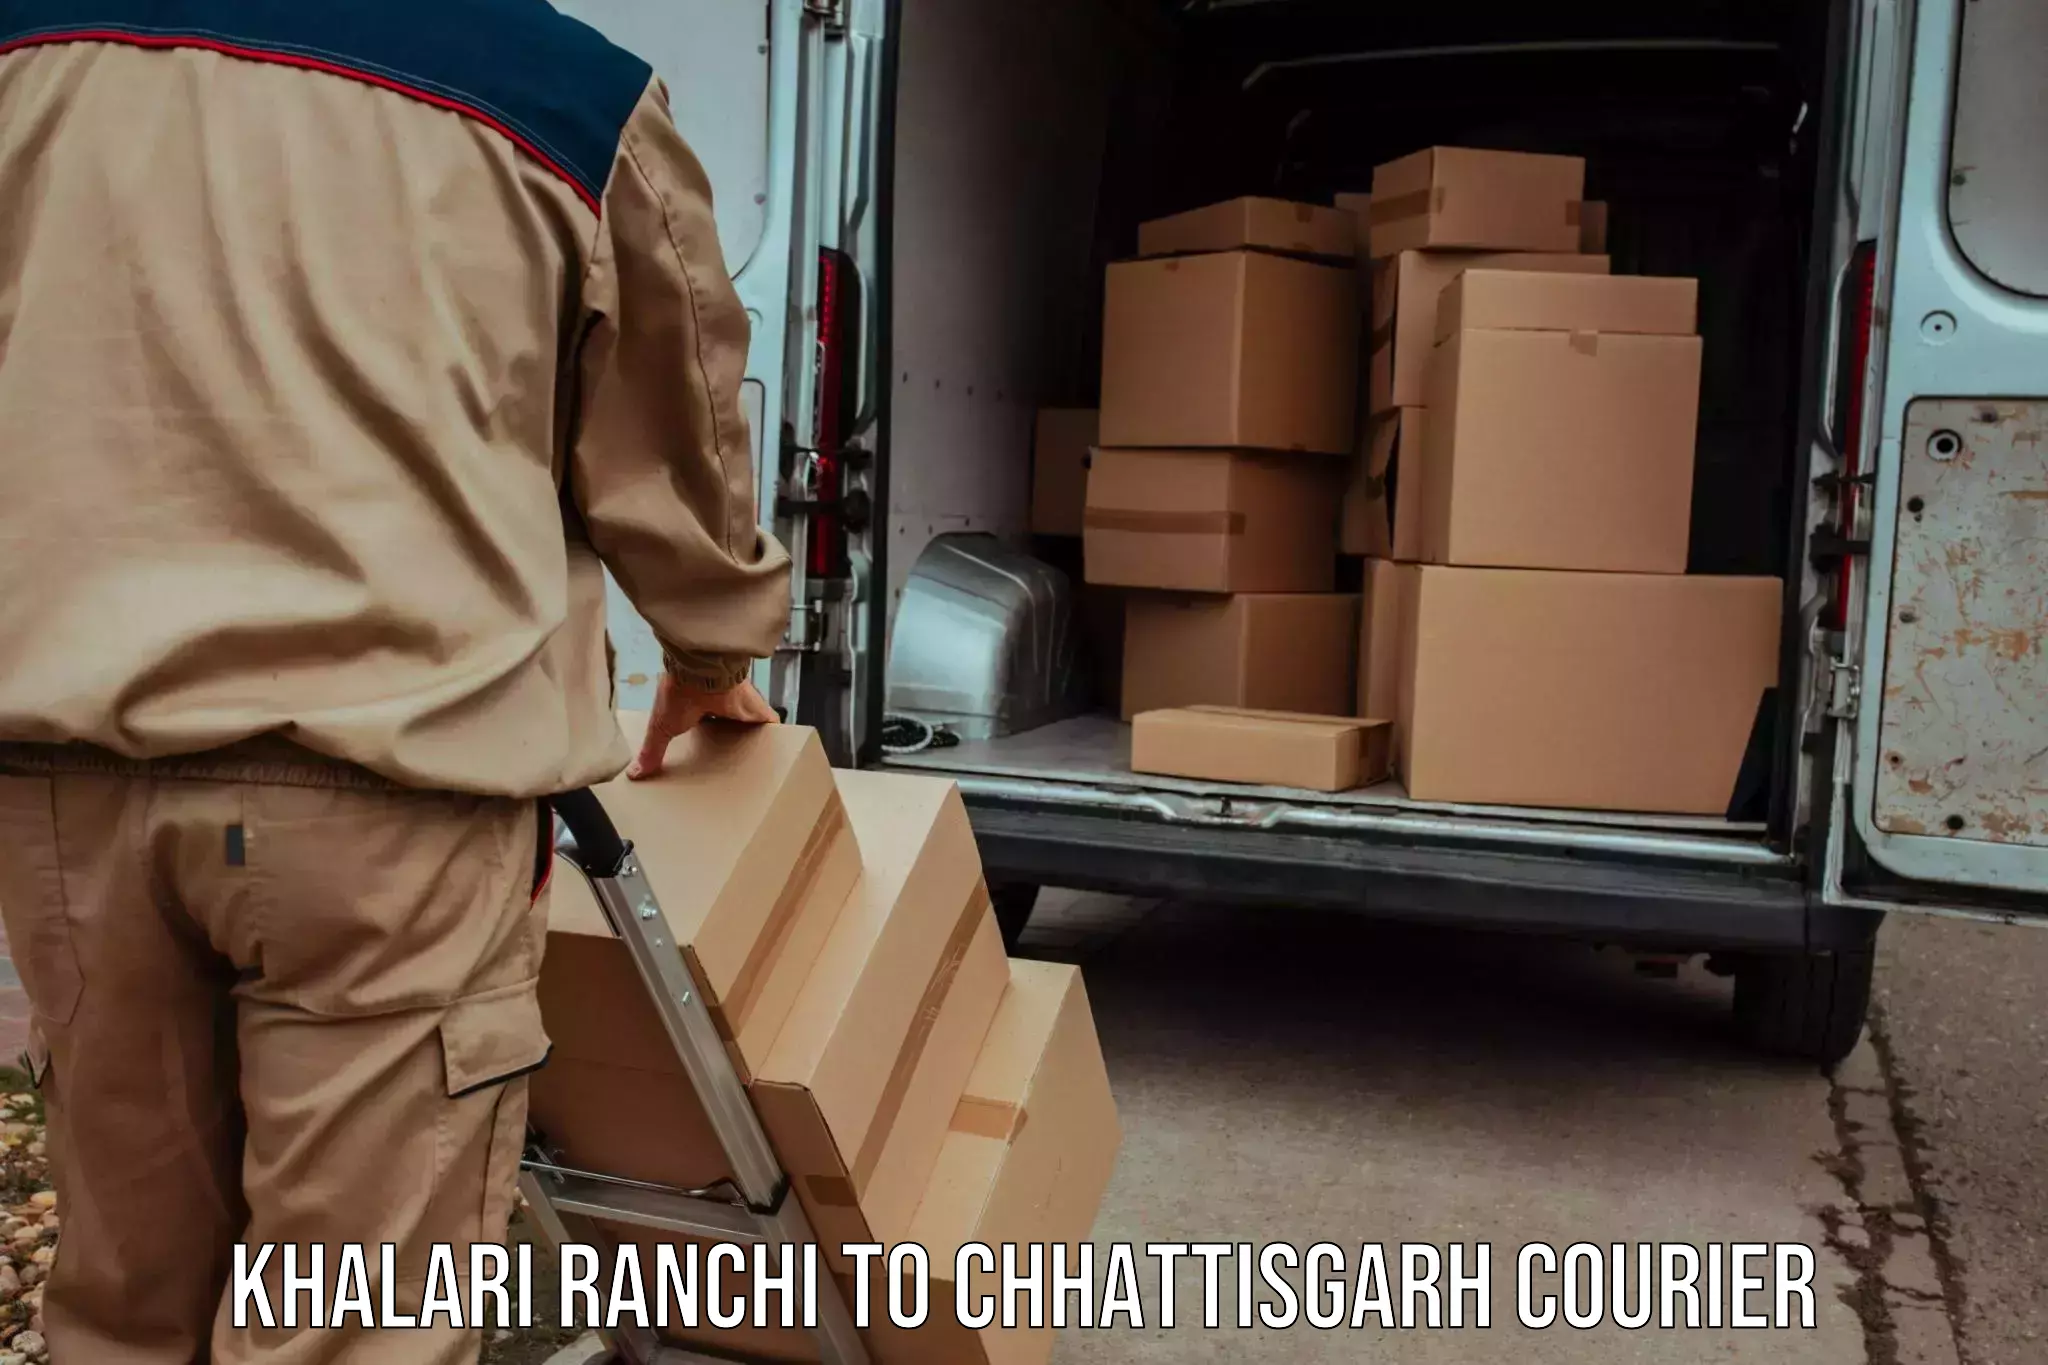 Weekend courier service Khalari Ranchi to bagbahra